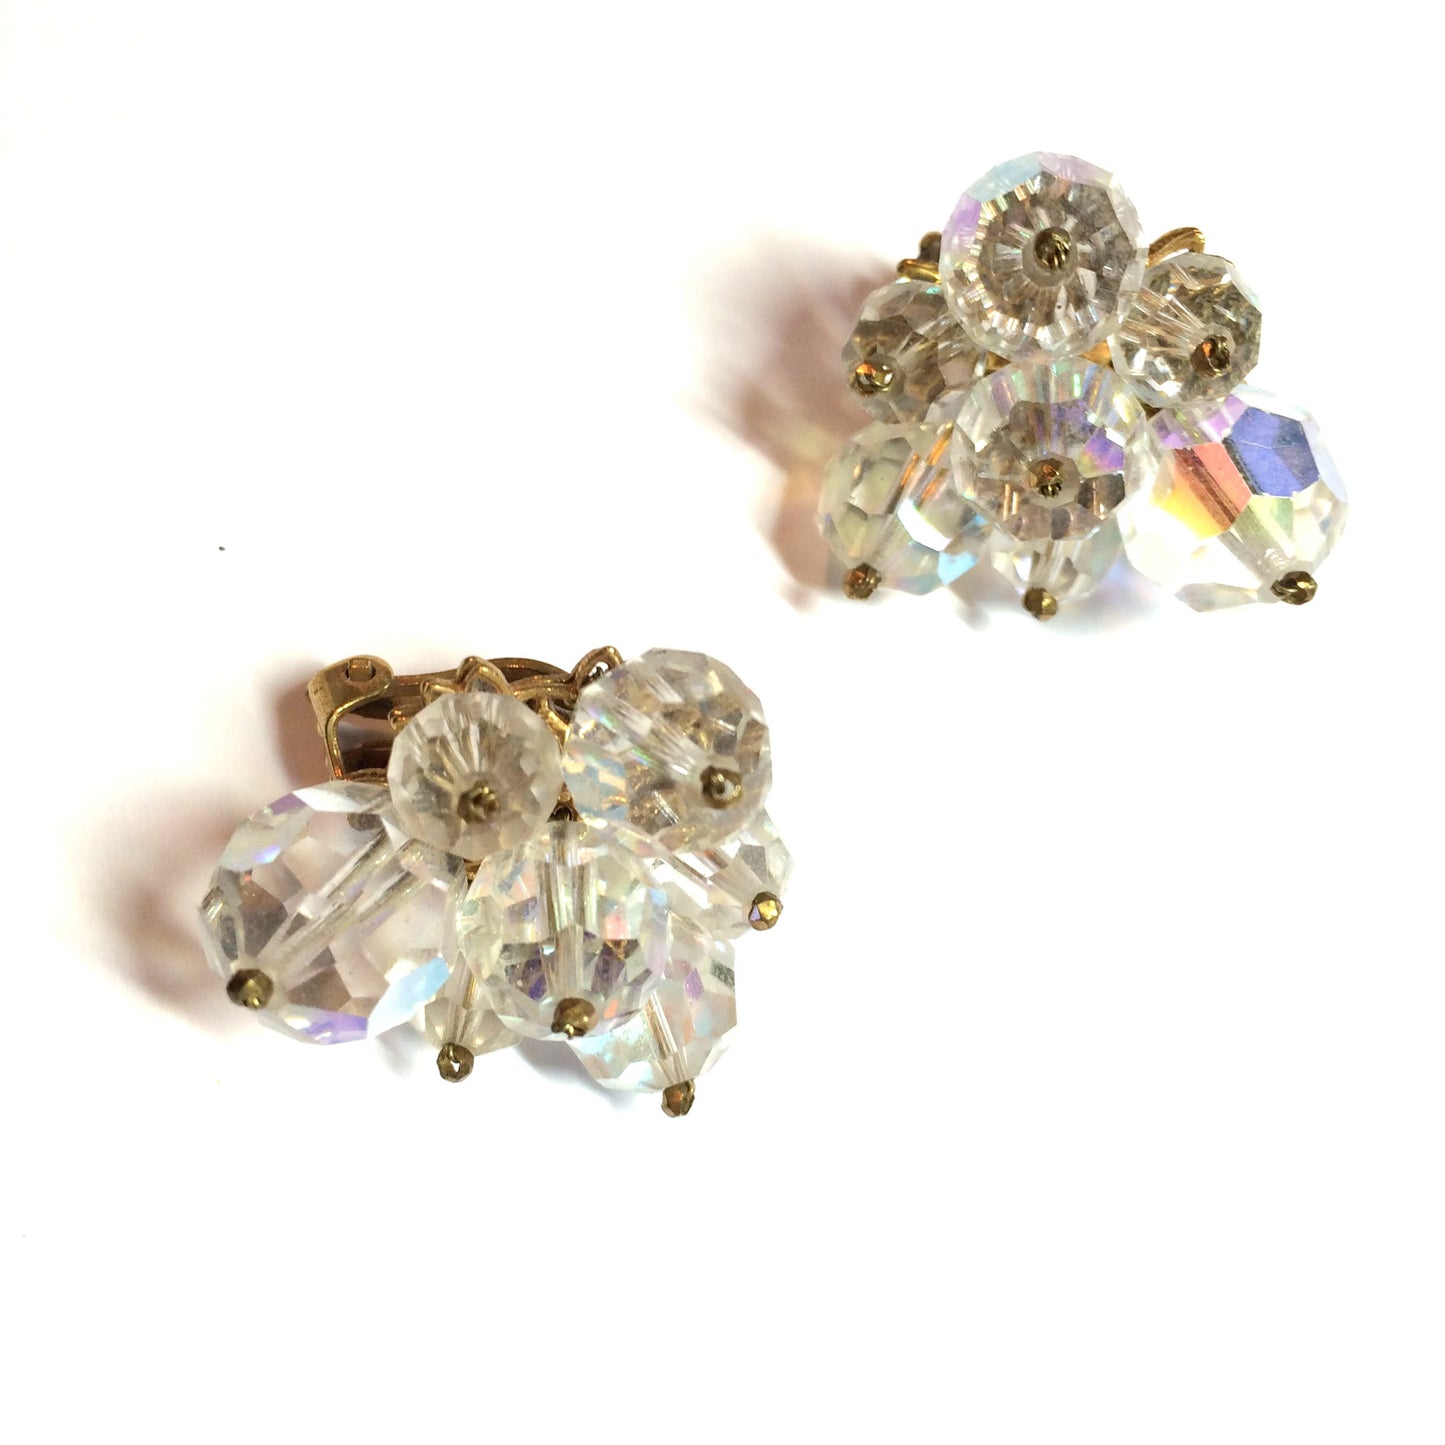 Robert Designer Large Beveled Crystal Clip Earrings circa 1950s